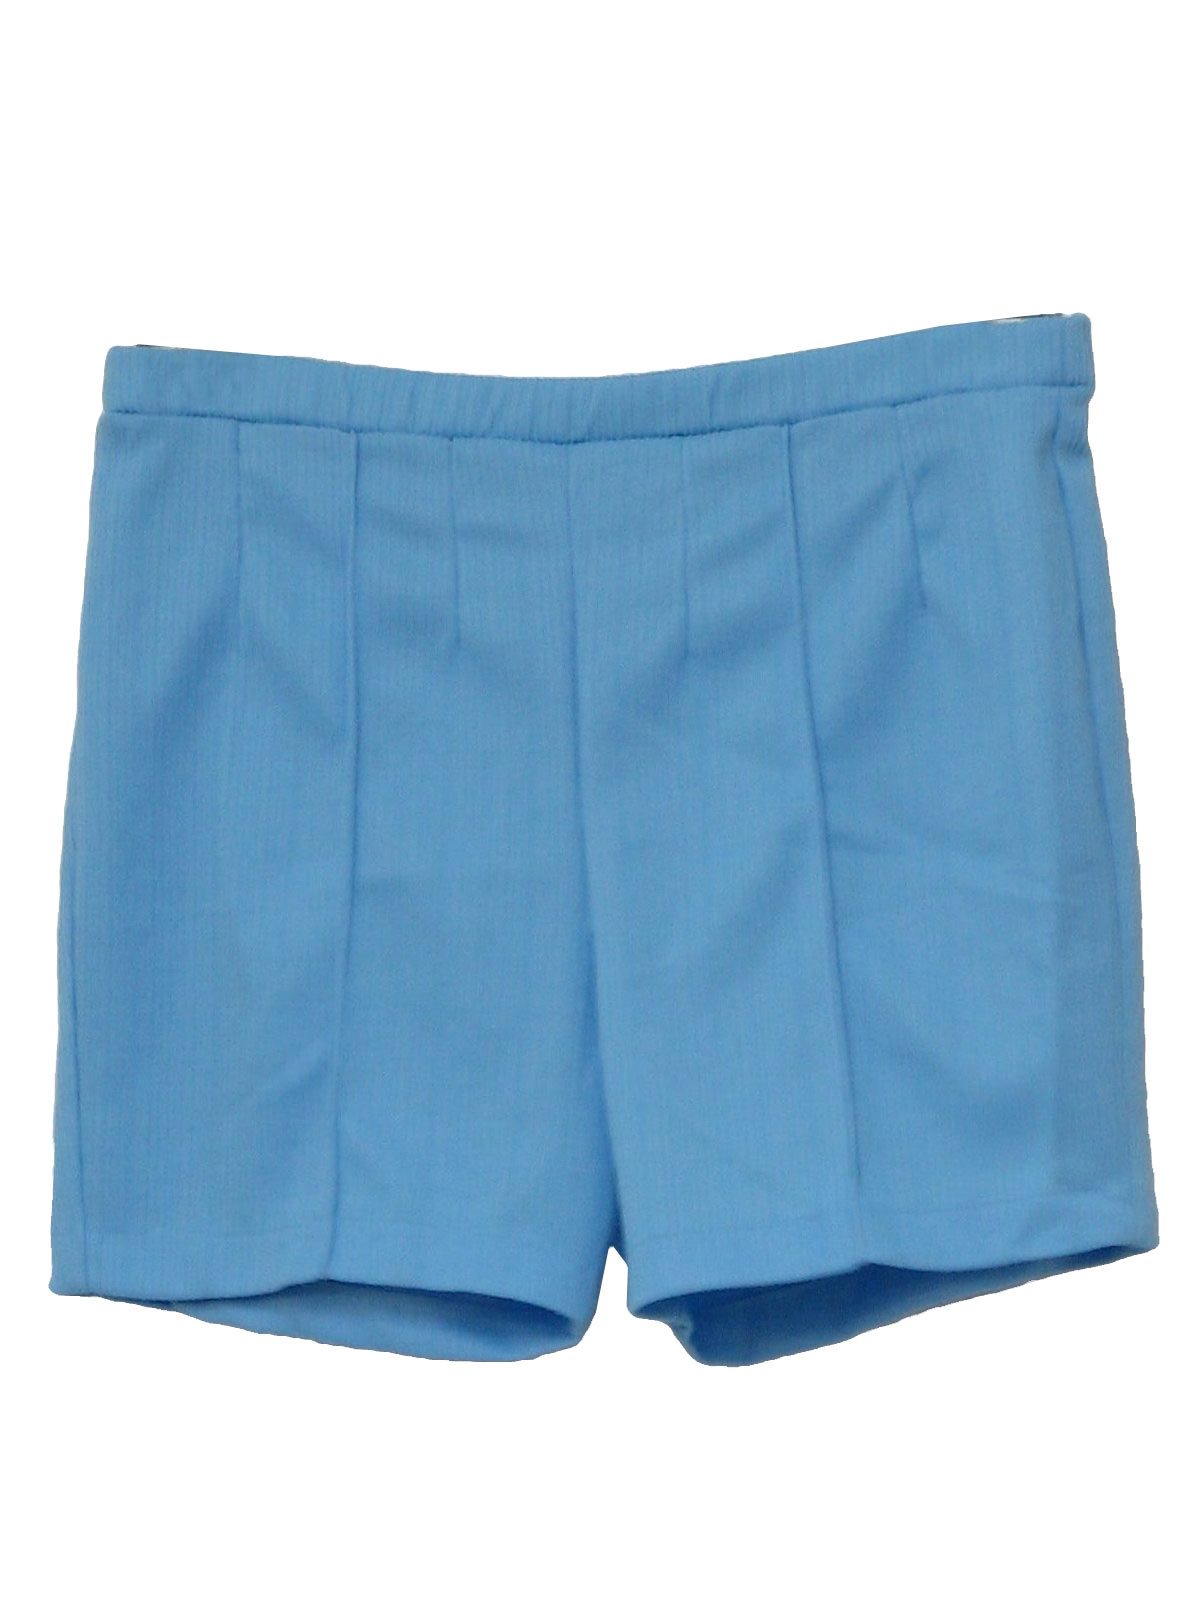 1970's Vintage Kmart Shorts: 70s -Kmart- Womens light blue